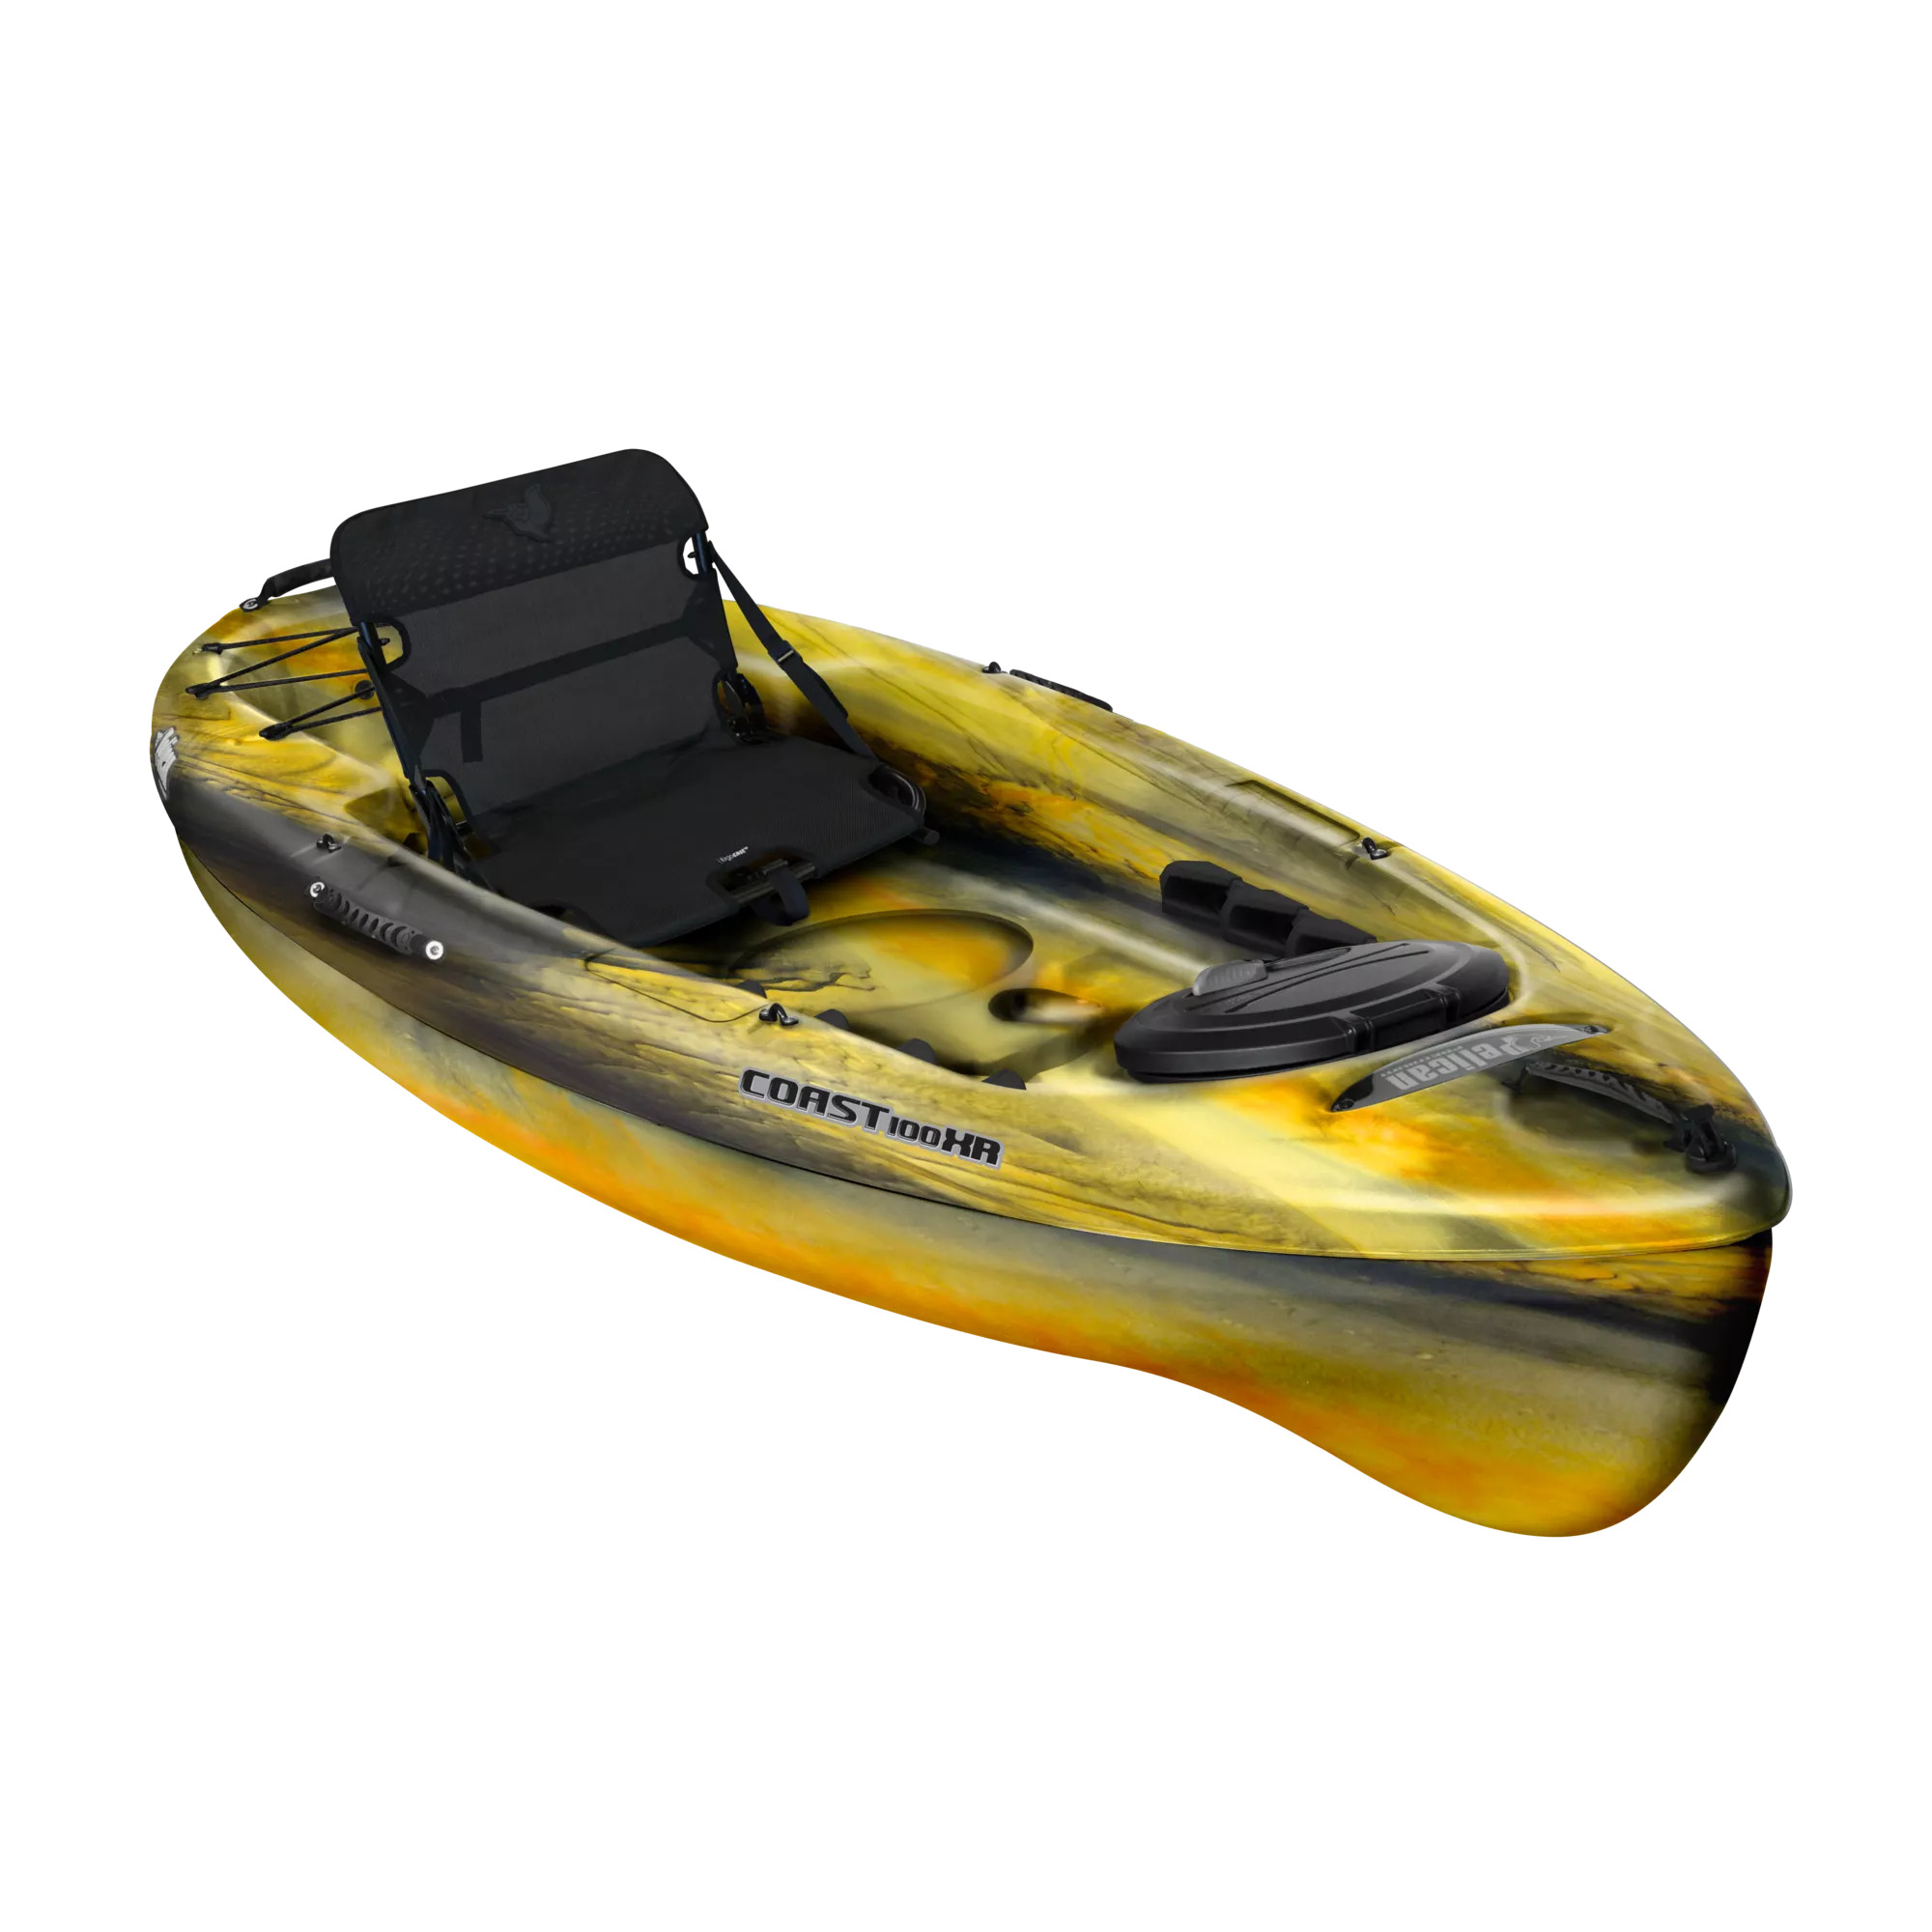 Sit-on-top kayak - Catch Mode 110 - Pelican International - rigid